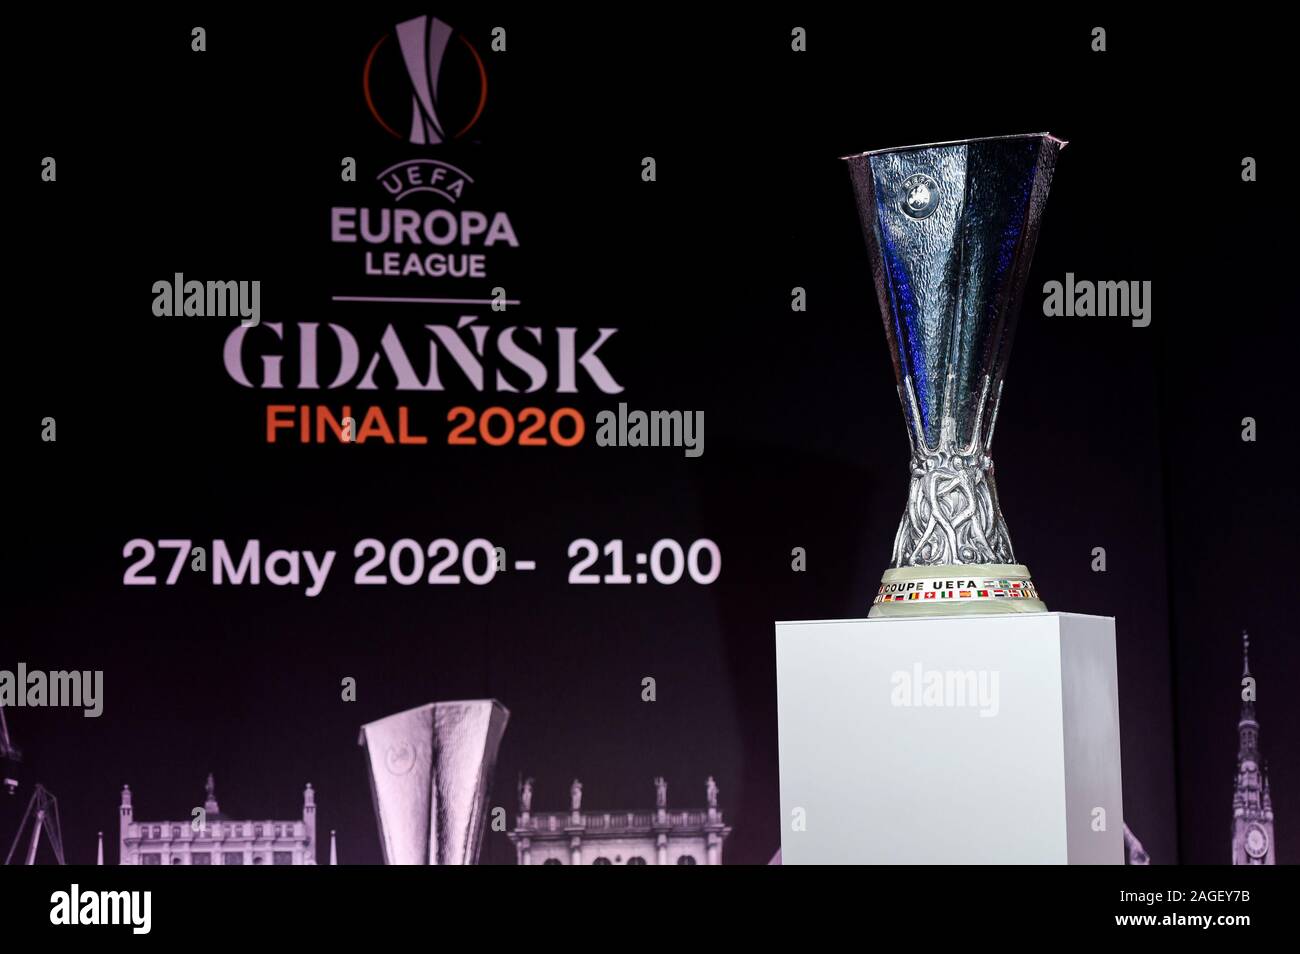 2019 uefa europa league final